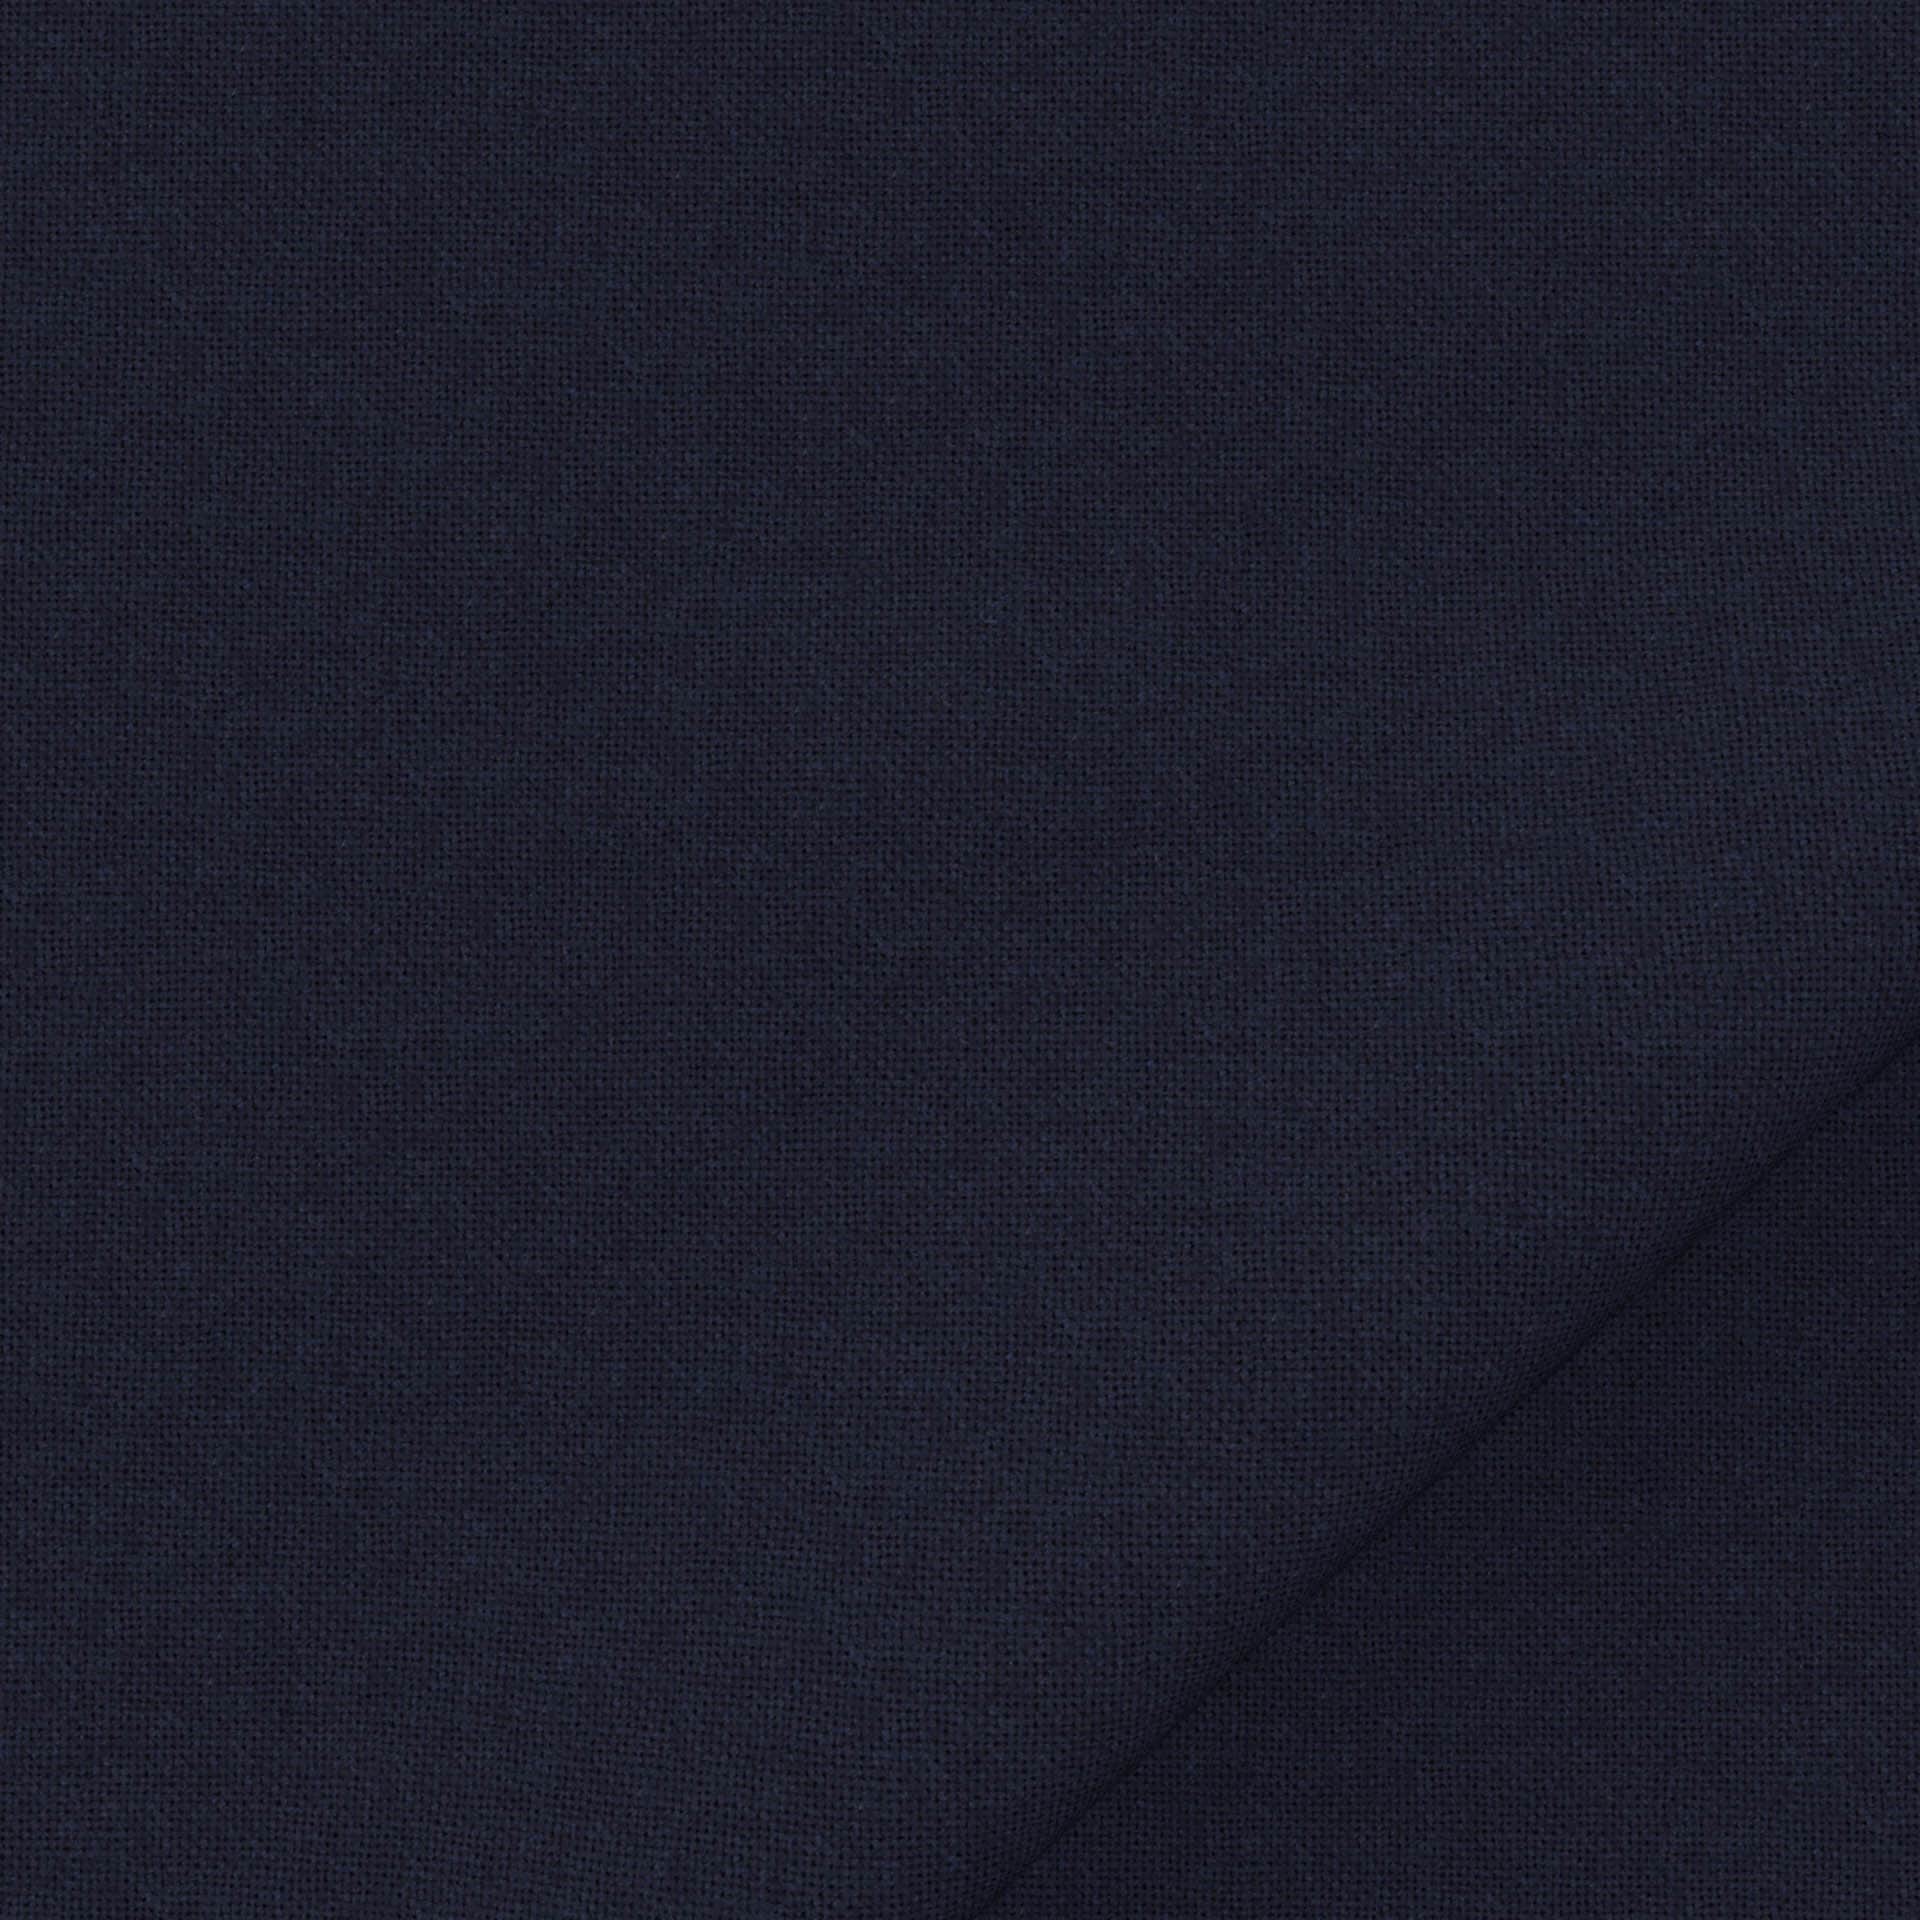 Custom made suit-tweed-navy-blue-Italian fabric-onceaday